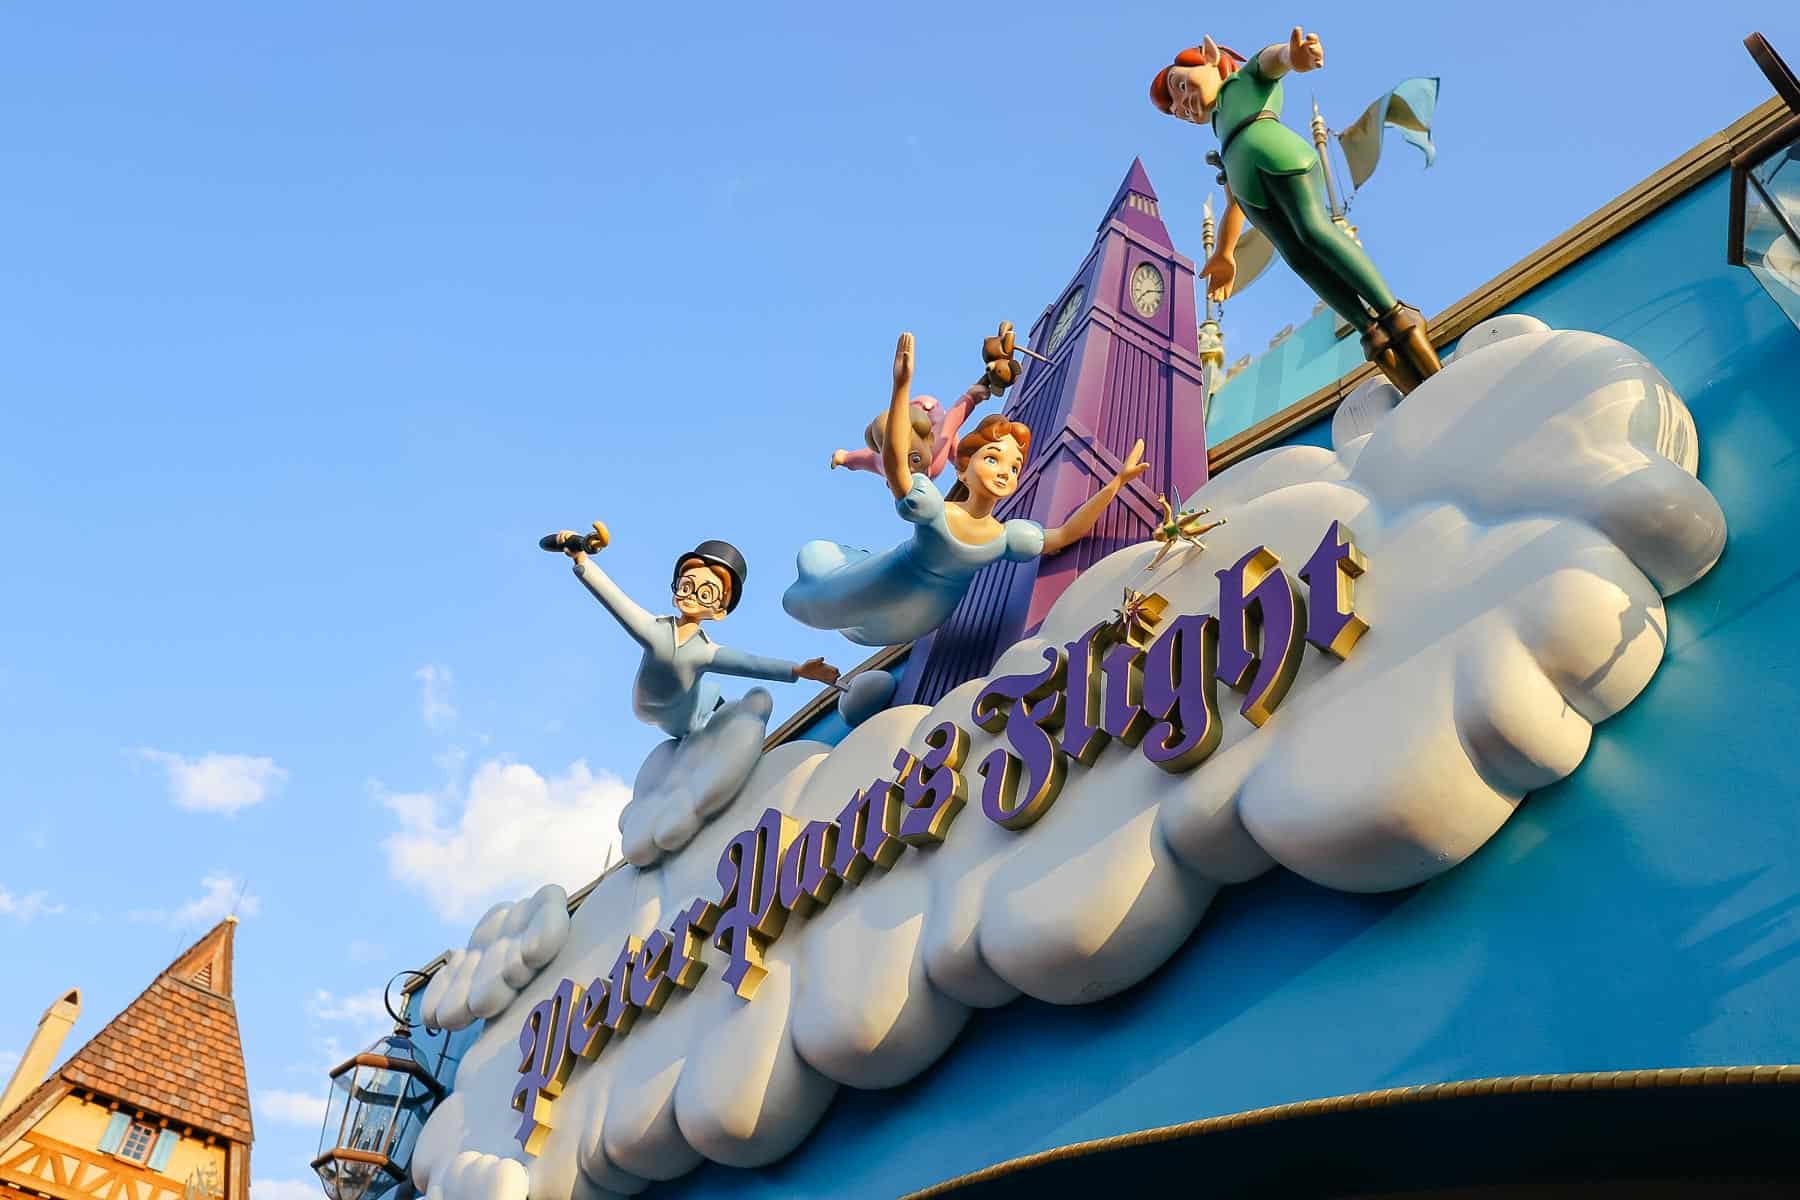 ride sign for Peter Pan's Flight at Magic Kingdom 